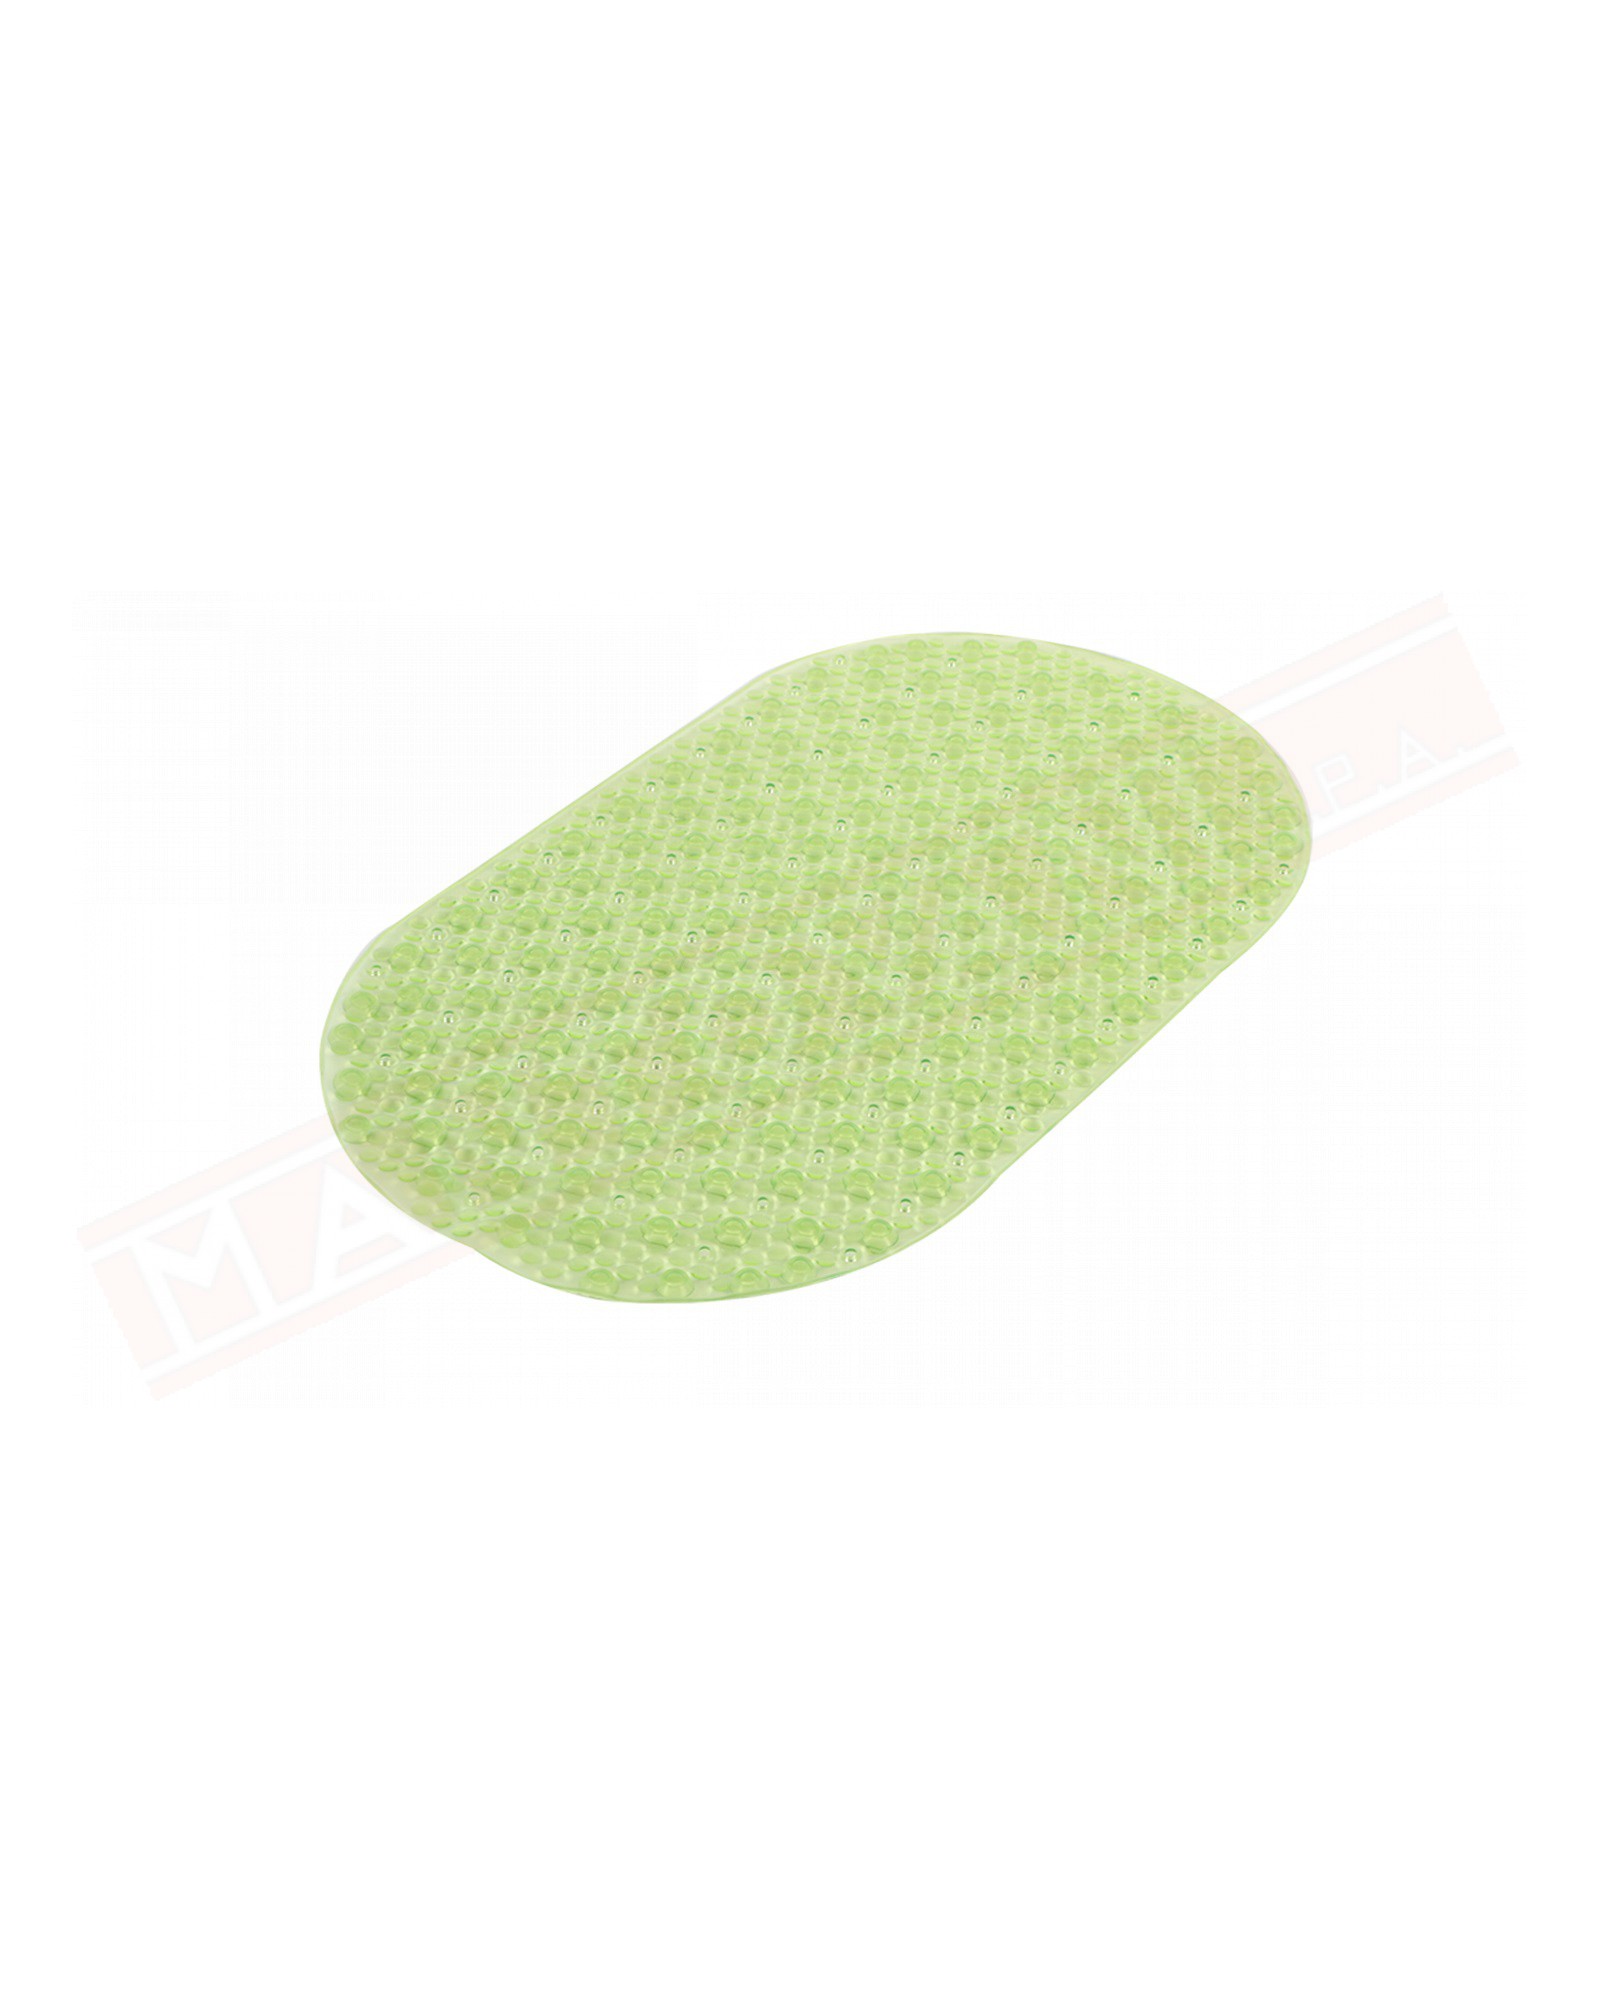 Gedy G.Solid tappeto antiscivolo per vasca in pvc trasparente verde misure art 69x38,5x0,7